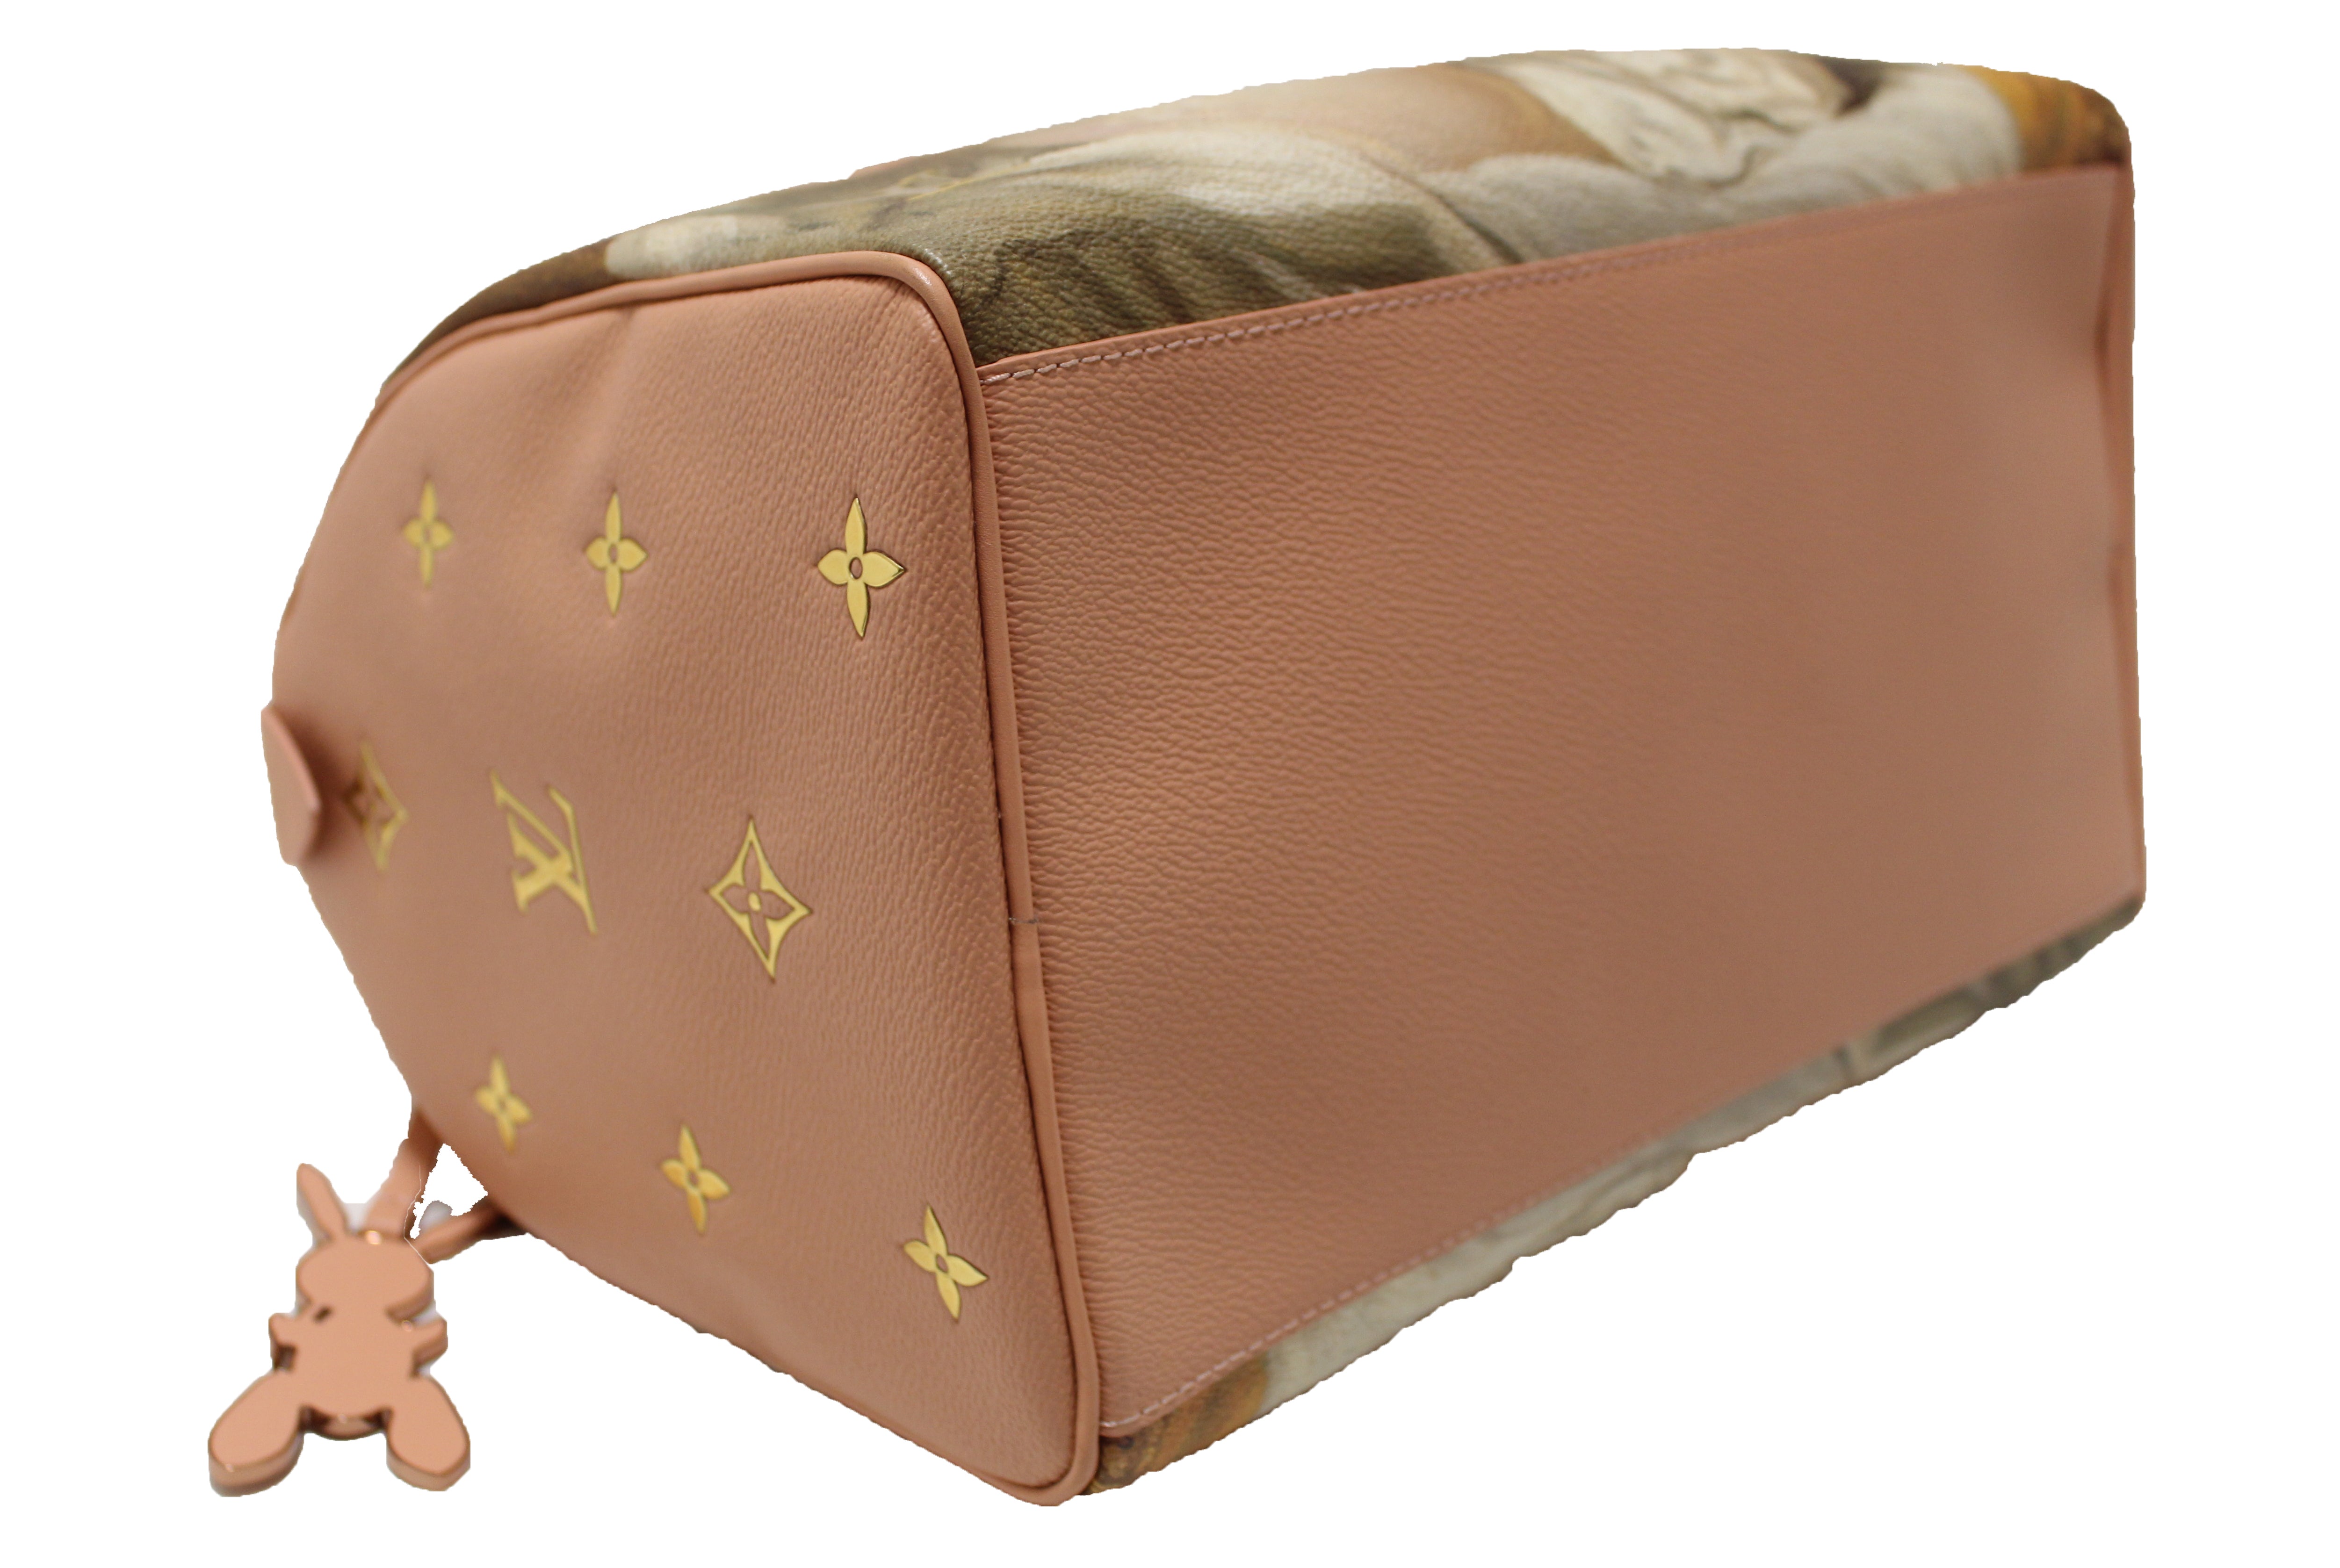 Authentic Louis Vuitton Limited Edition Masters Speedy 30 Jeff Koons Fragonard Bag